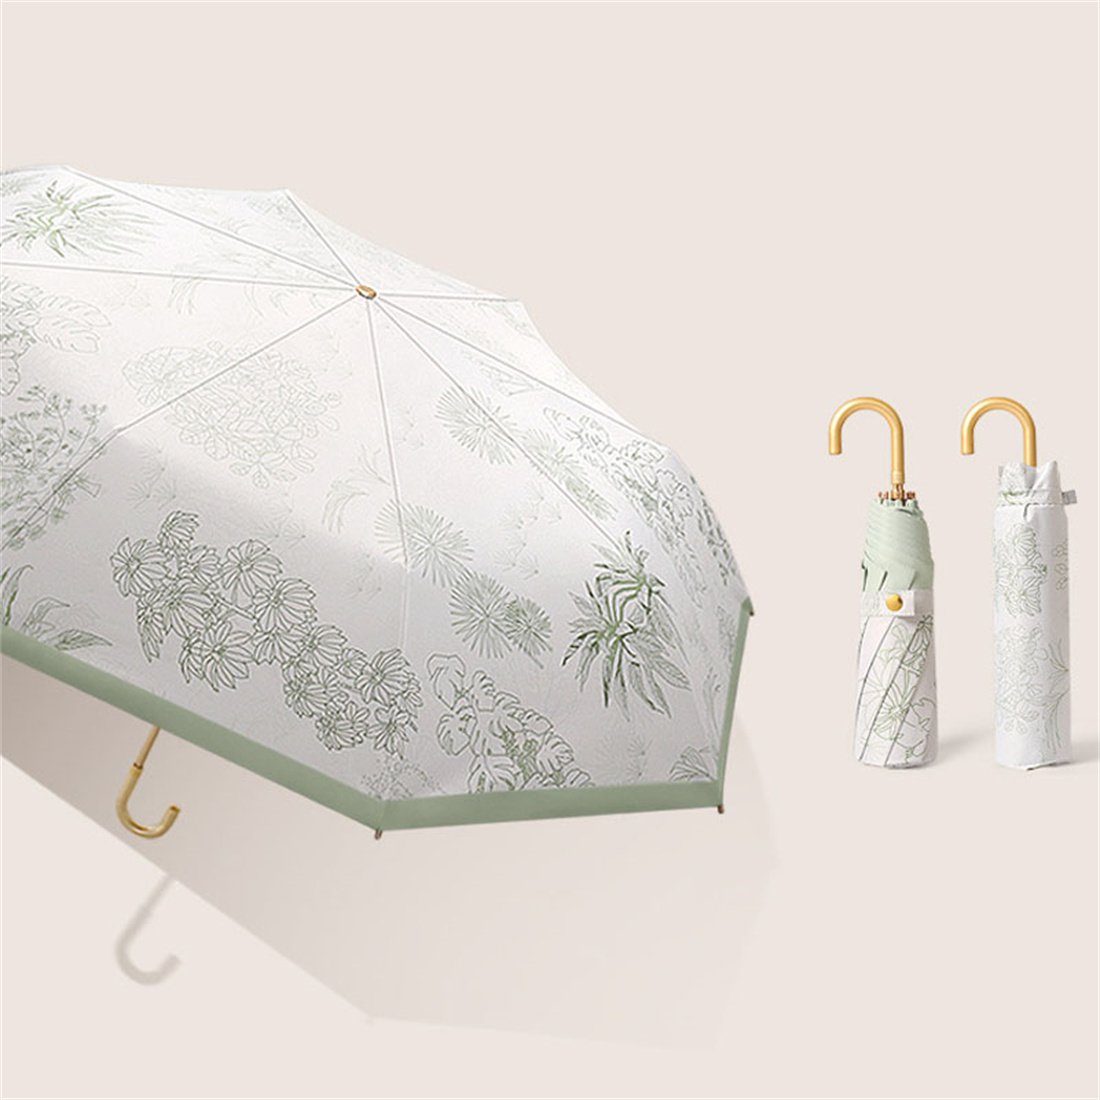 DÖRÖY Taschenregenschirm UV-Faltschirm,gebogener Hakenschirm,Blumenmuster-Regenschirm,regenfest | Taschenschirme